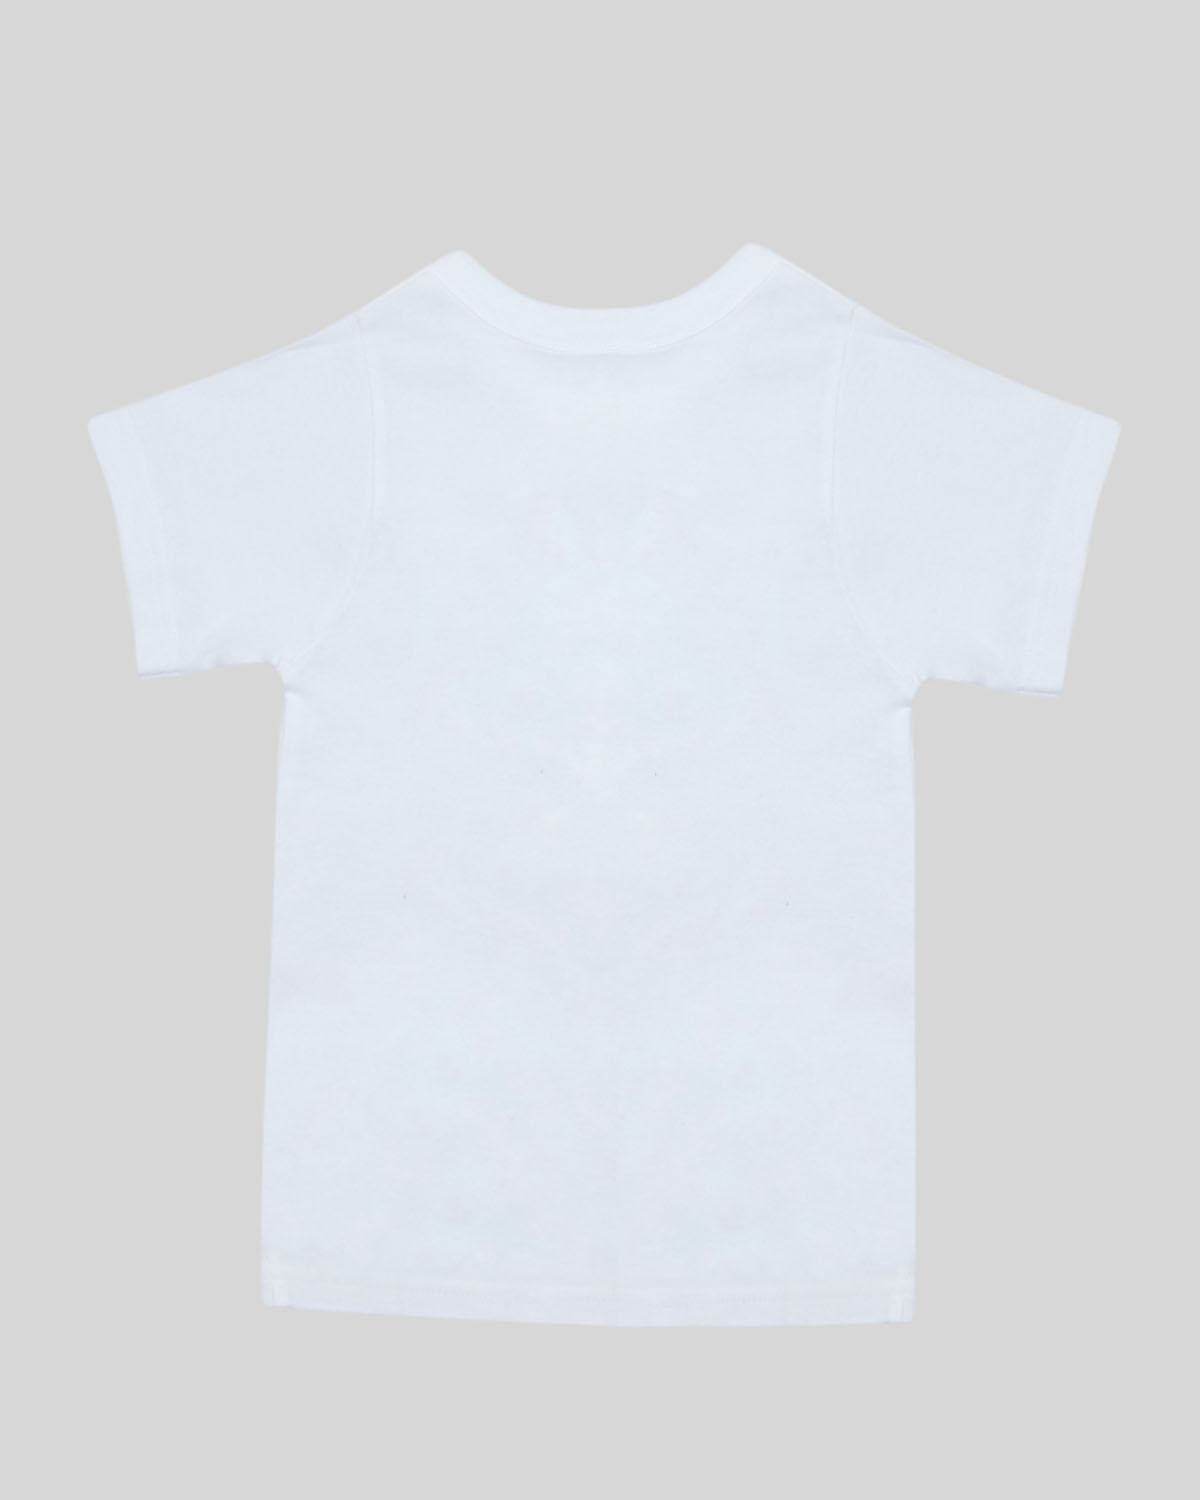 Shop Plain White T Shirt For Teens Boys online